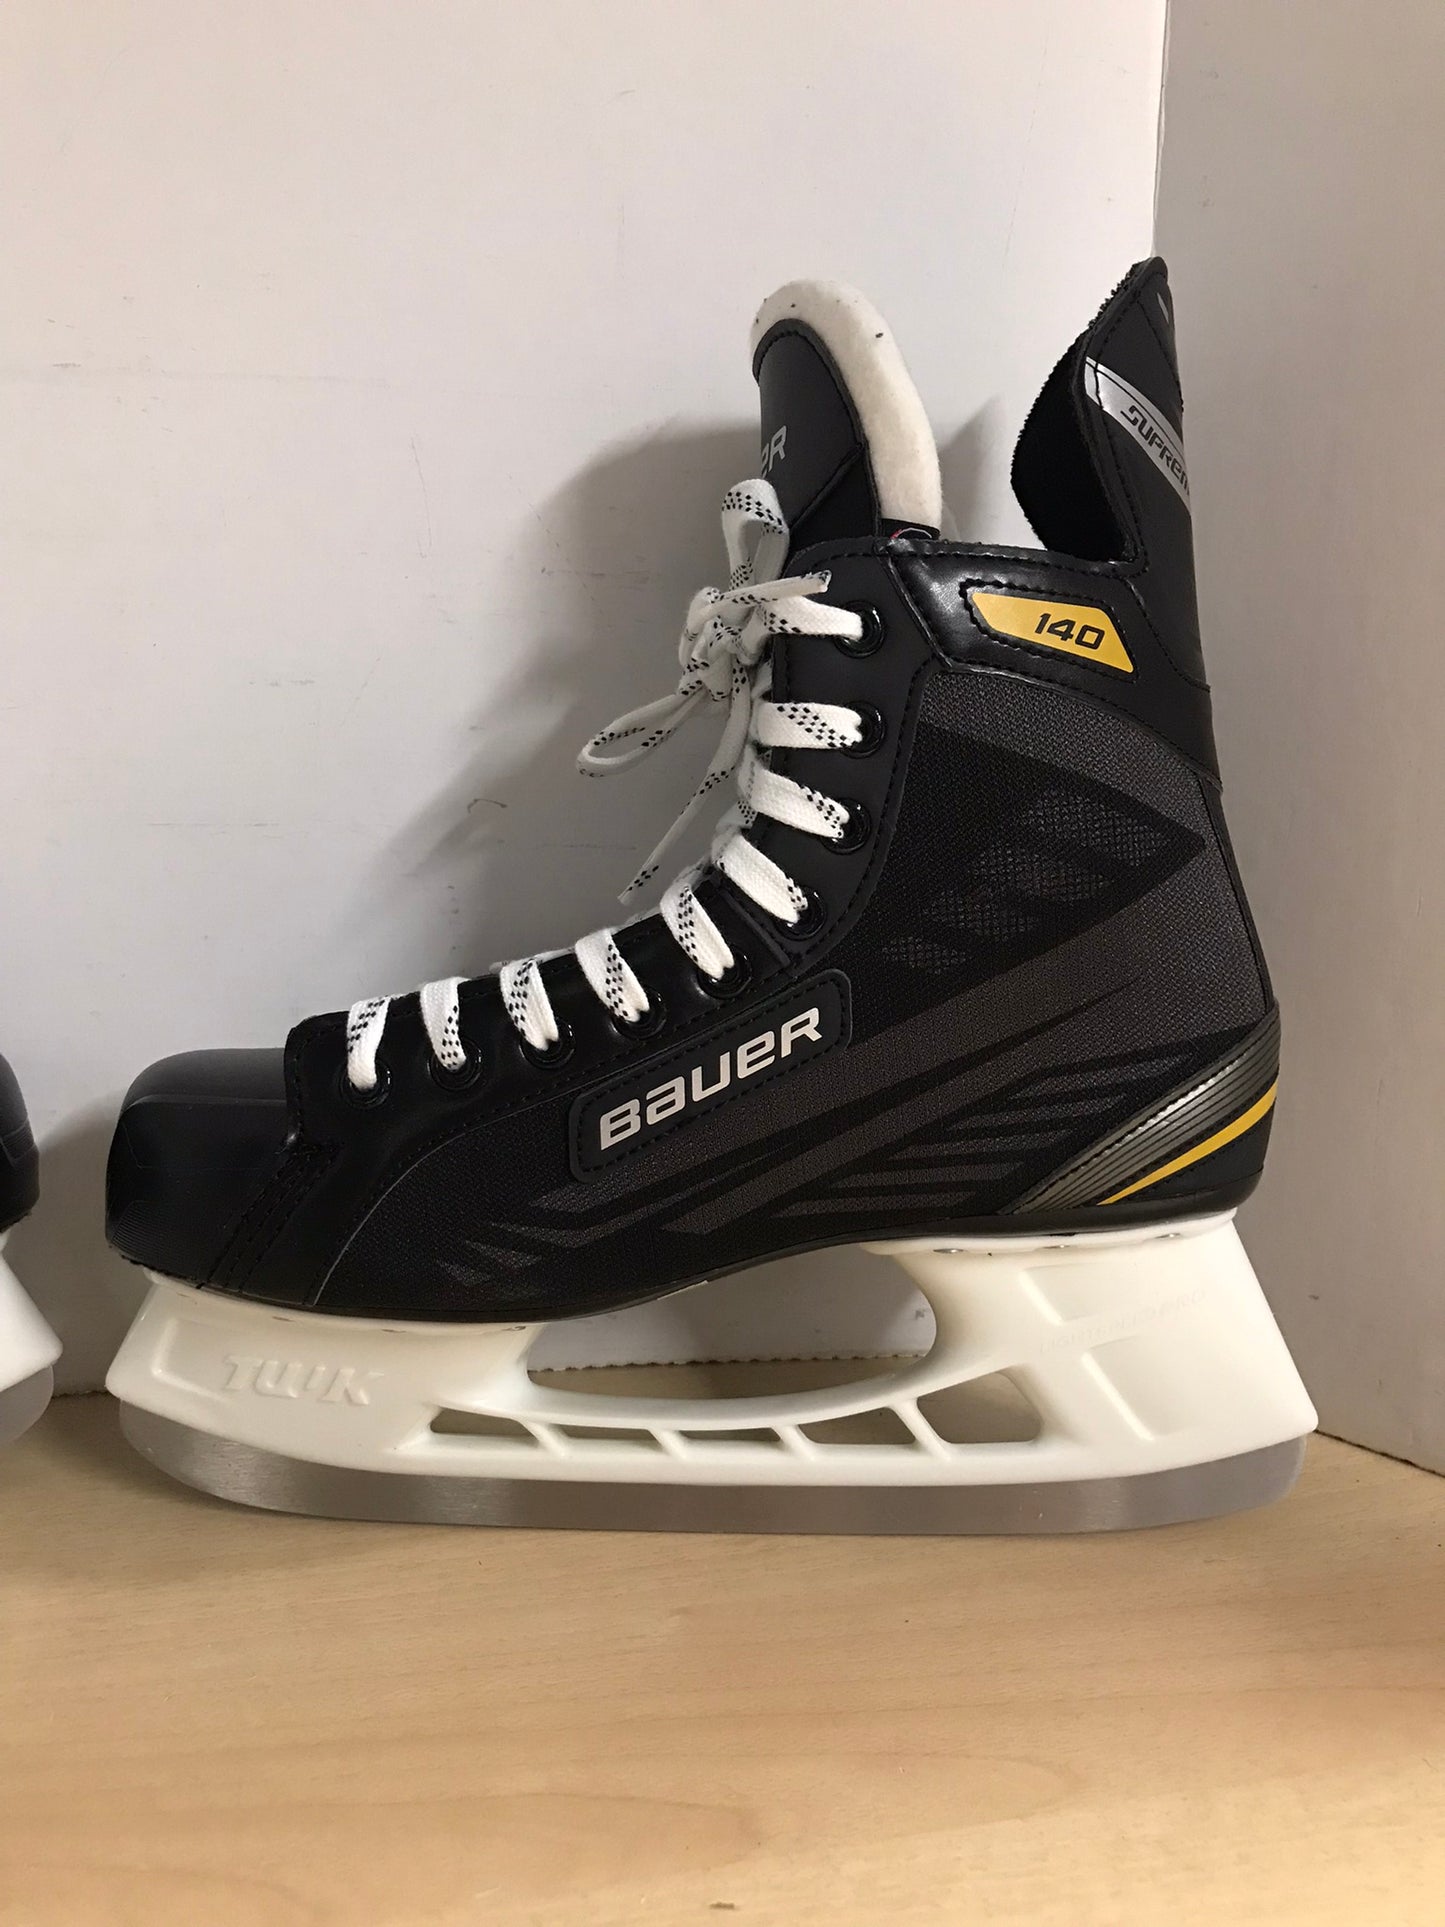 Hockey Skates Men's Size 9.5 Shoe Size Bauer Supreme 140 New Demo Model